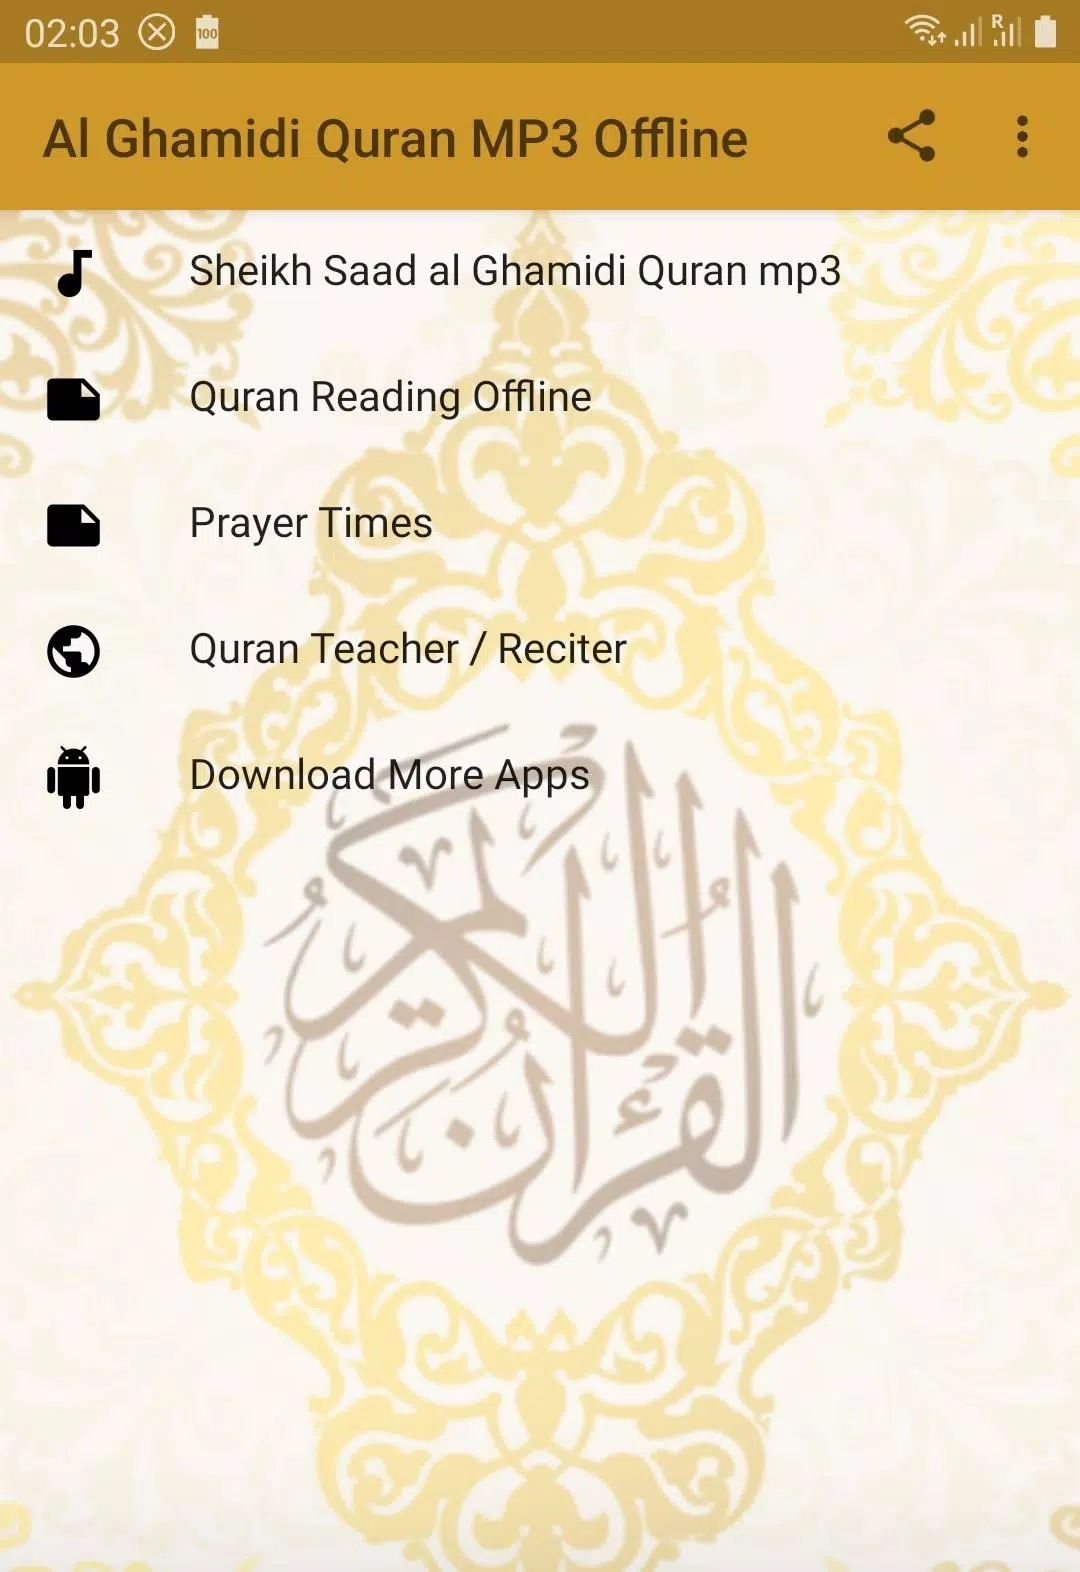 Al Ghamidi Quran MP3 Offline APK for Android Download